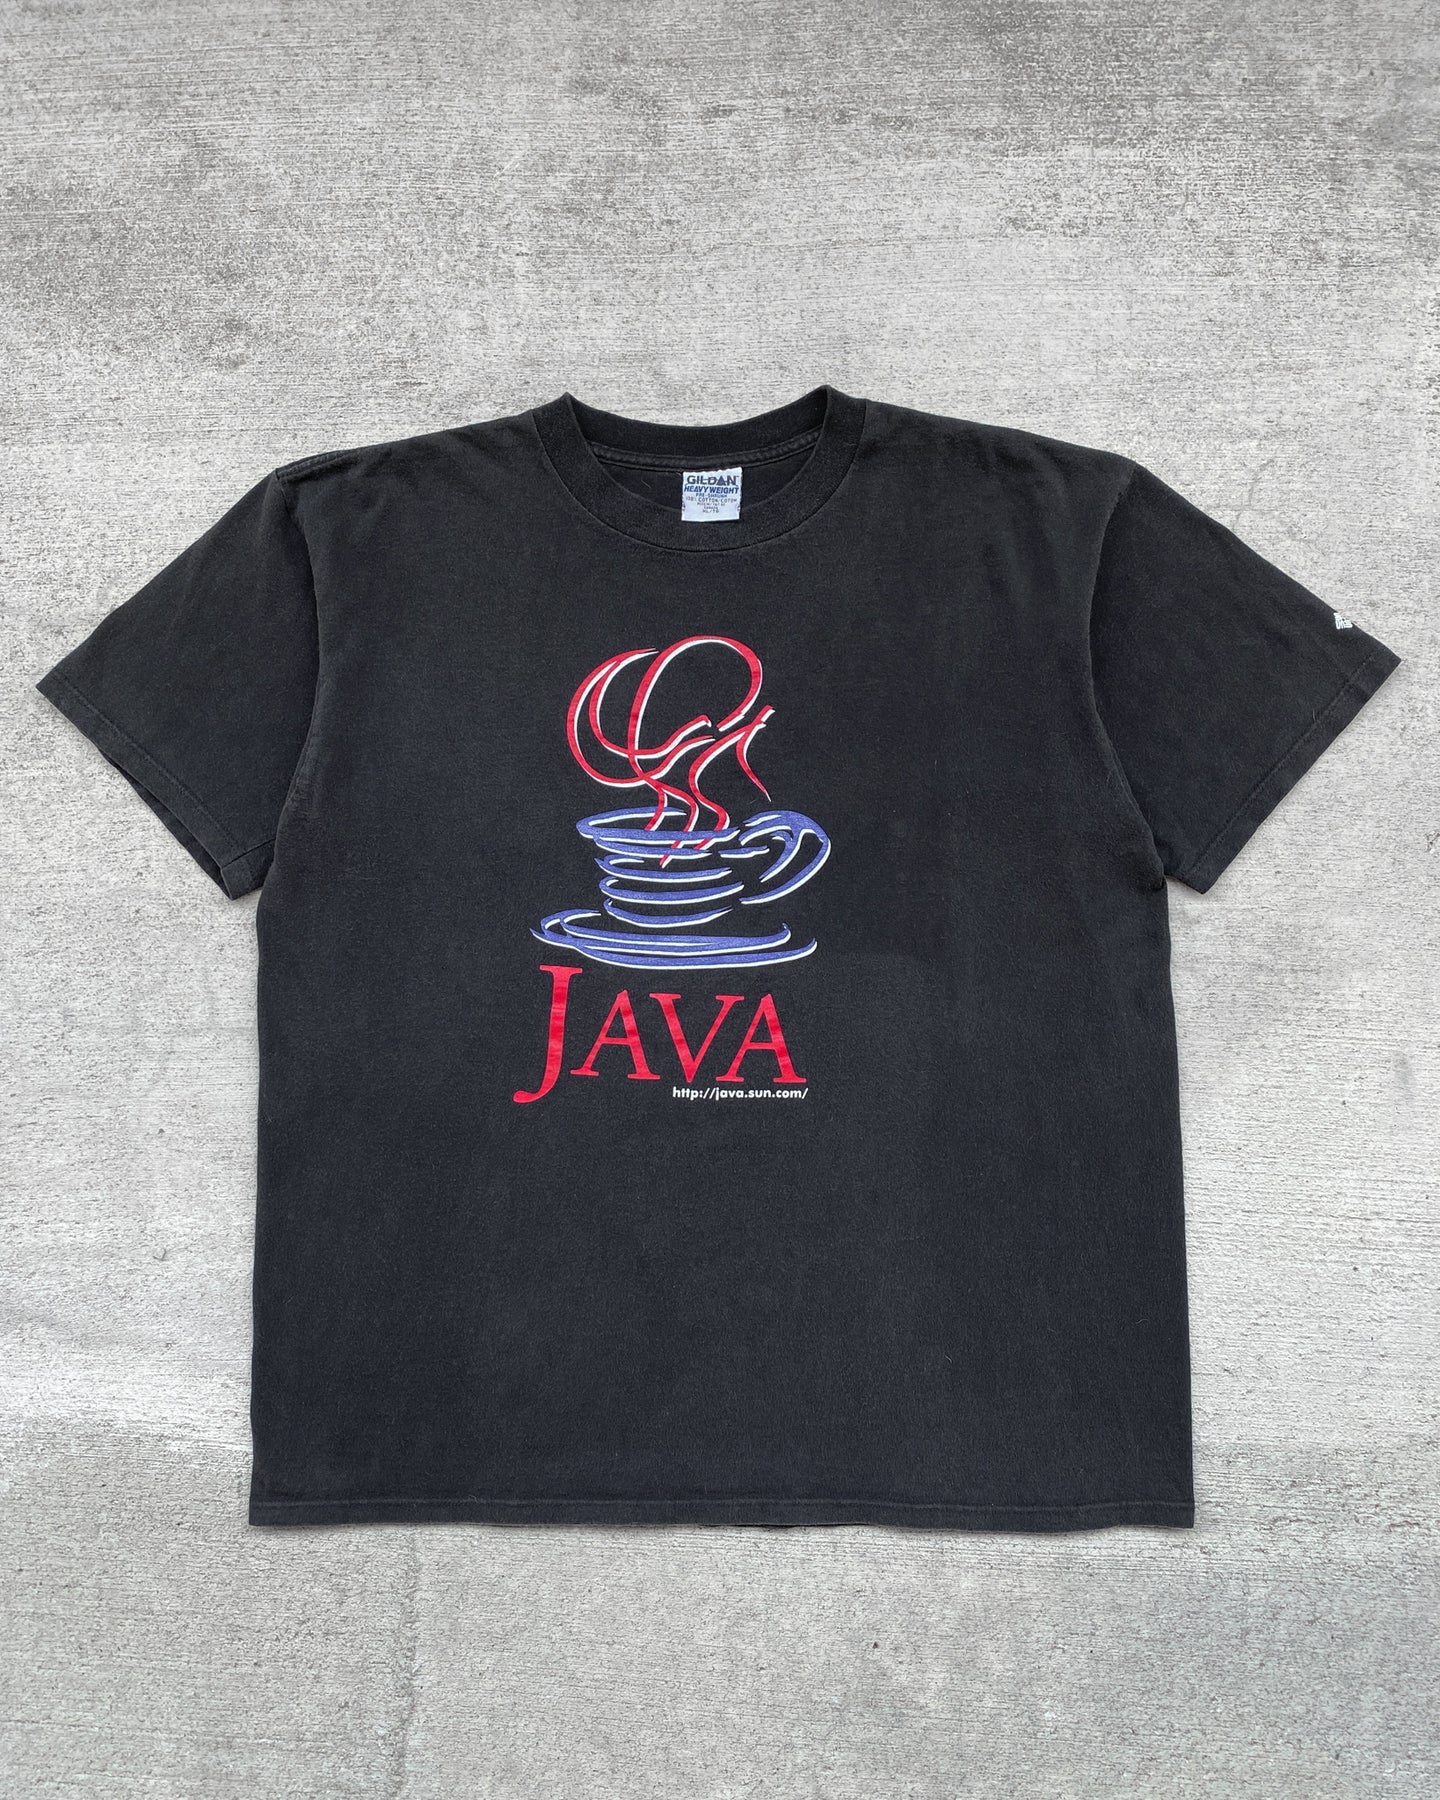 1990s Black Javascript Graphic Tee - Size X-Large